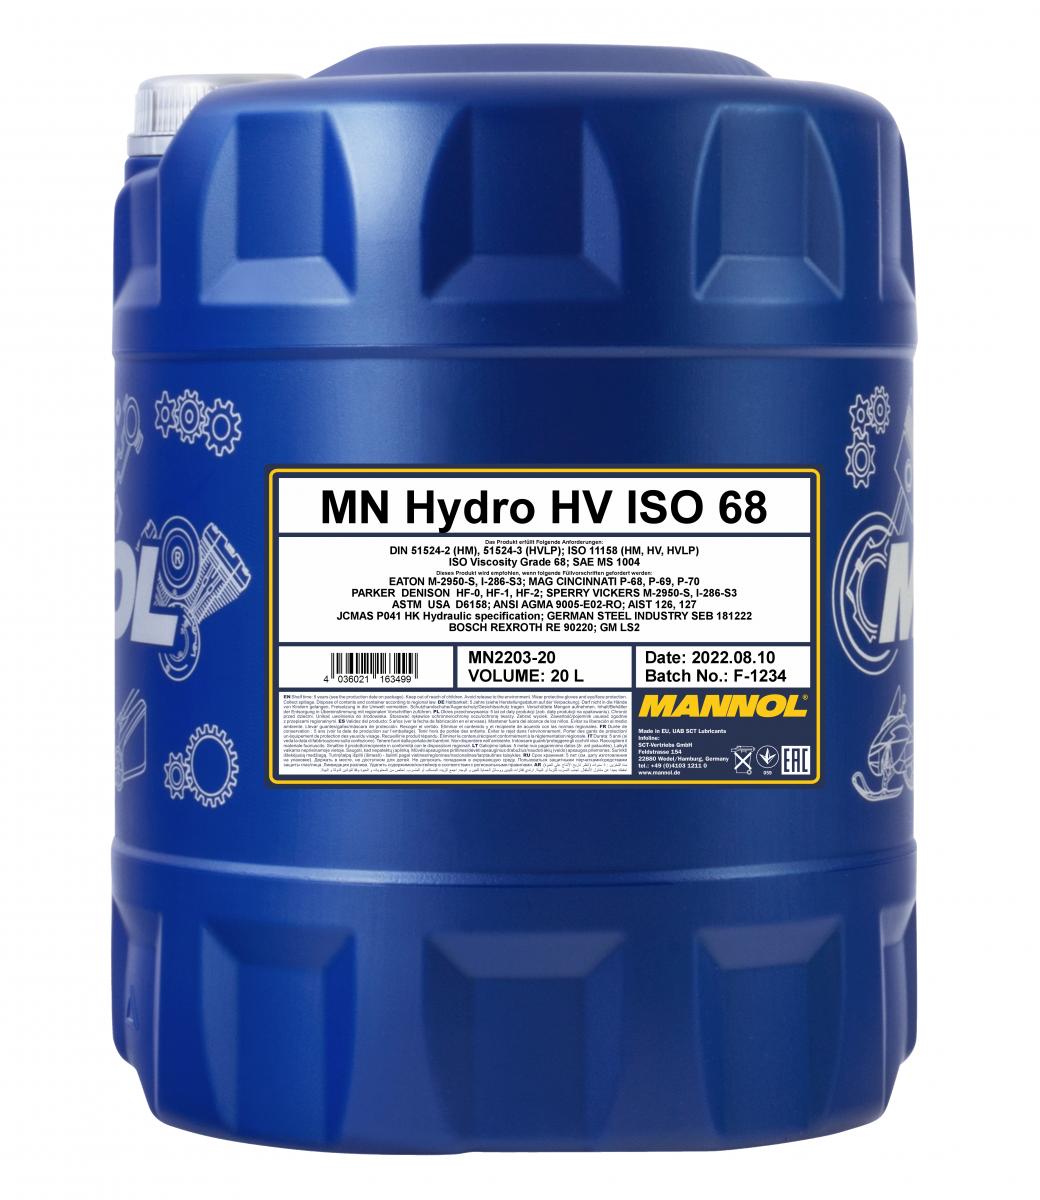 MN Hydro HV ISO 68